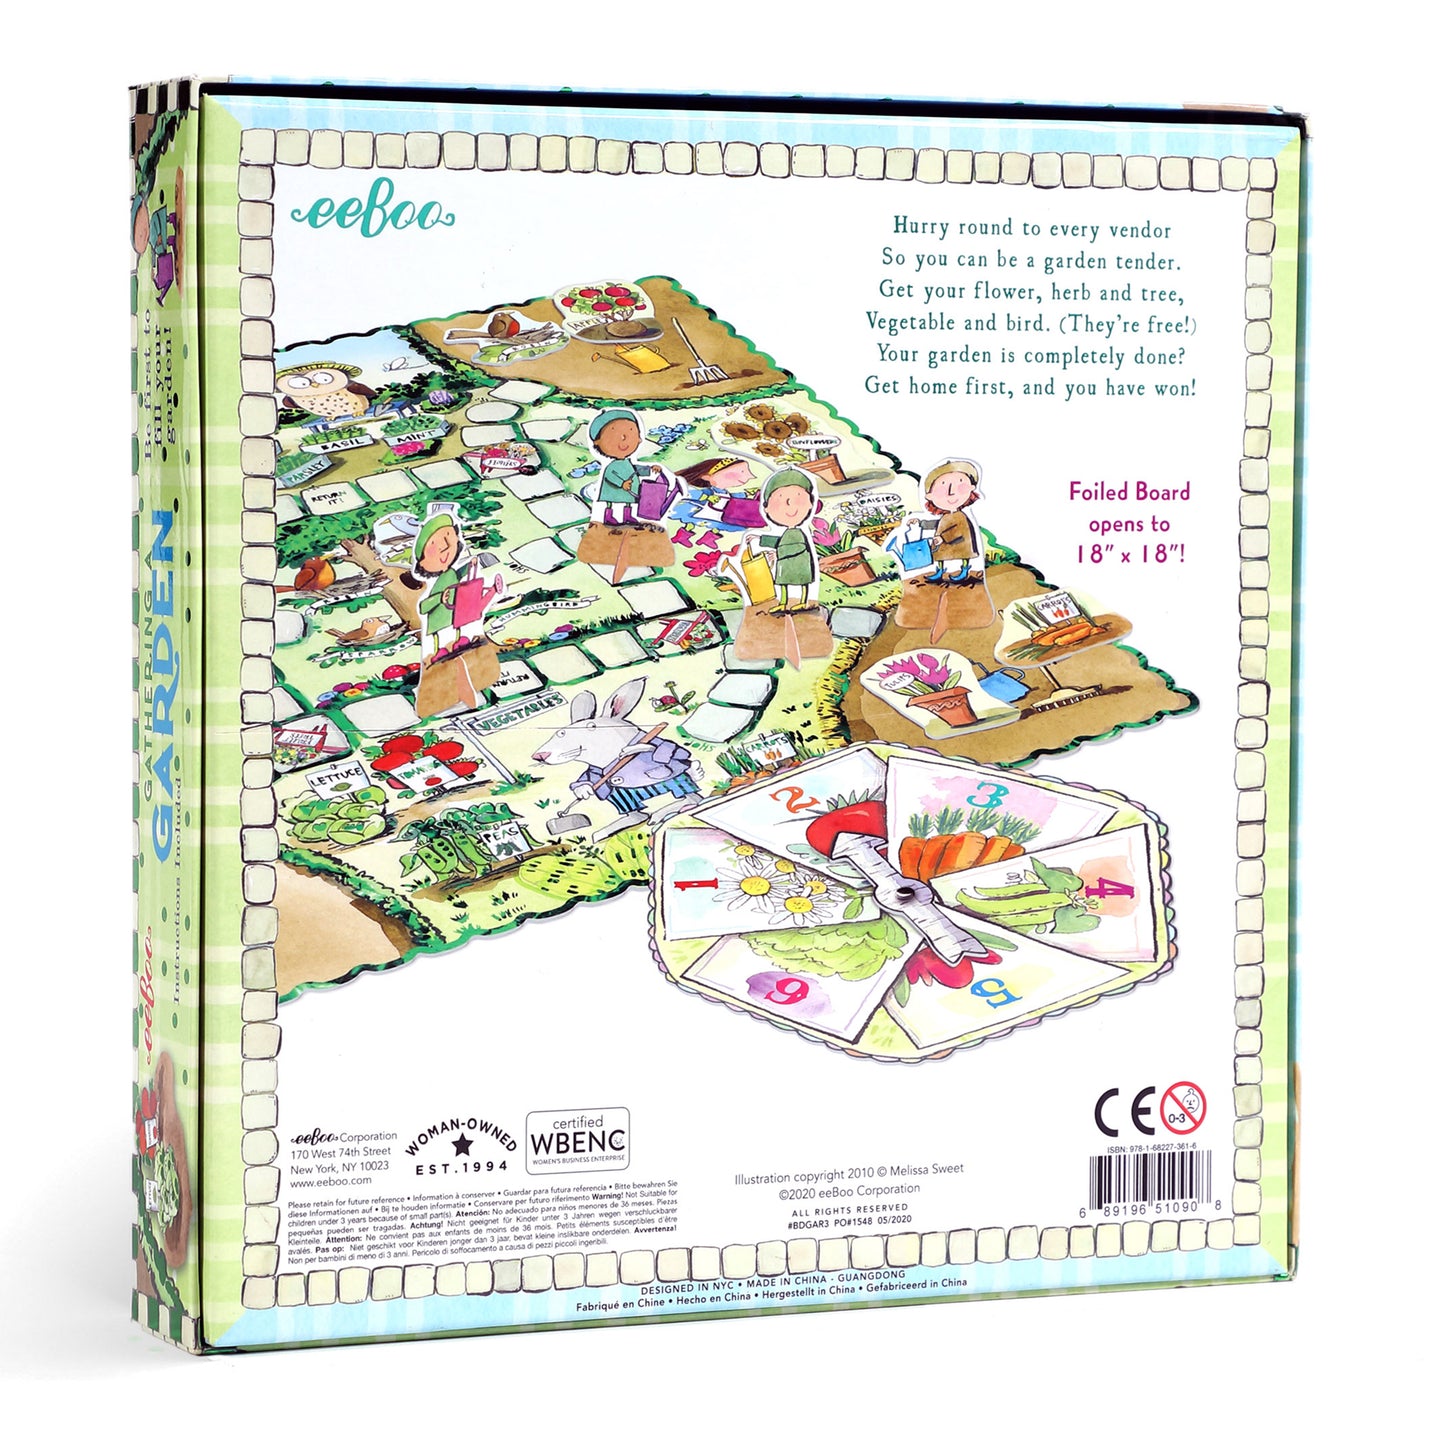 Gathering a Garden | Award Winning Kids Board Game by eeBoo